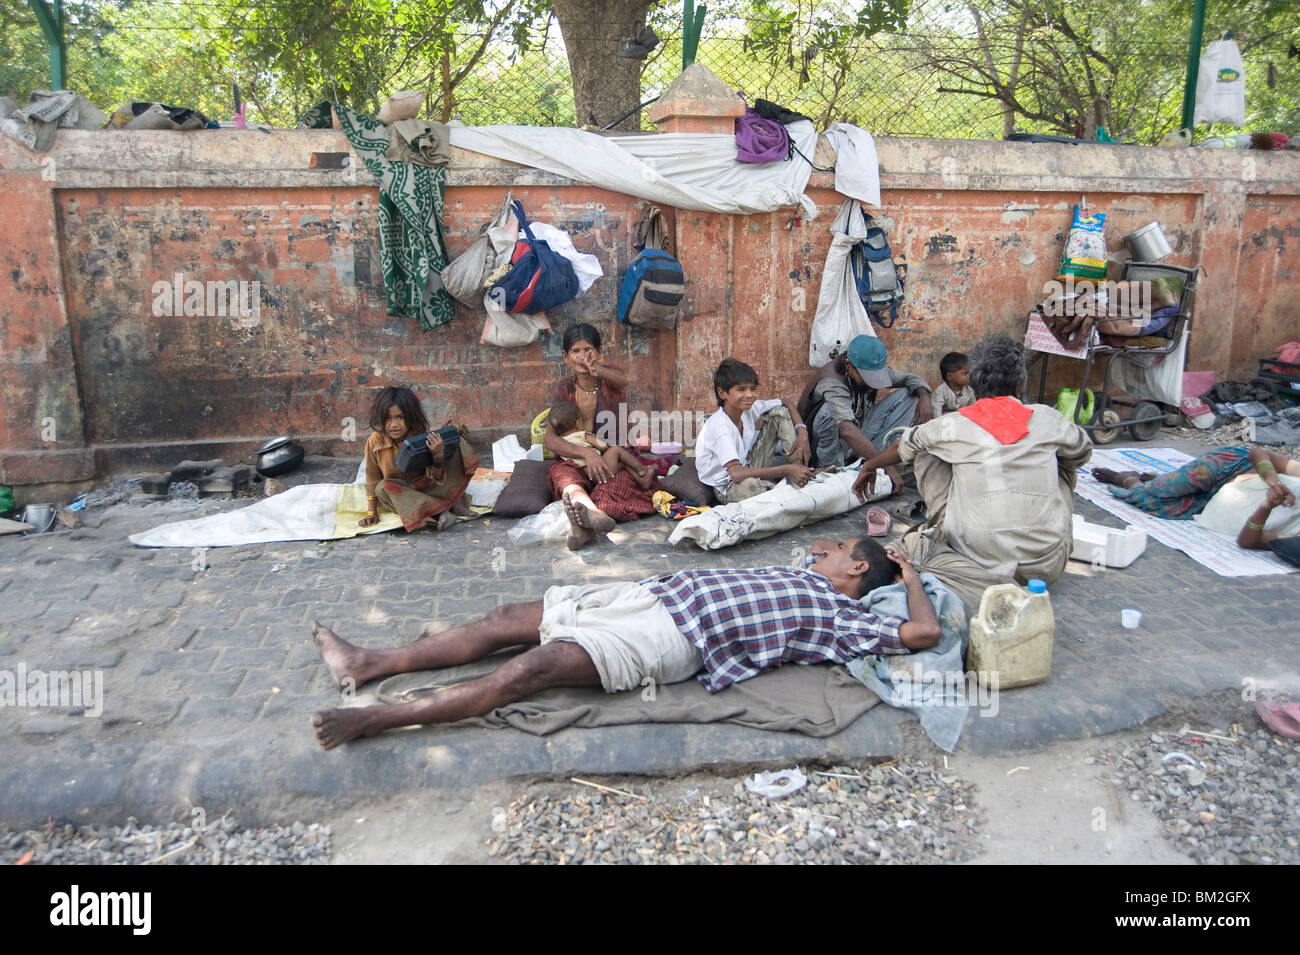 Street people sleeping rough in Jaipur, Rajasthan, India Stock Photo